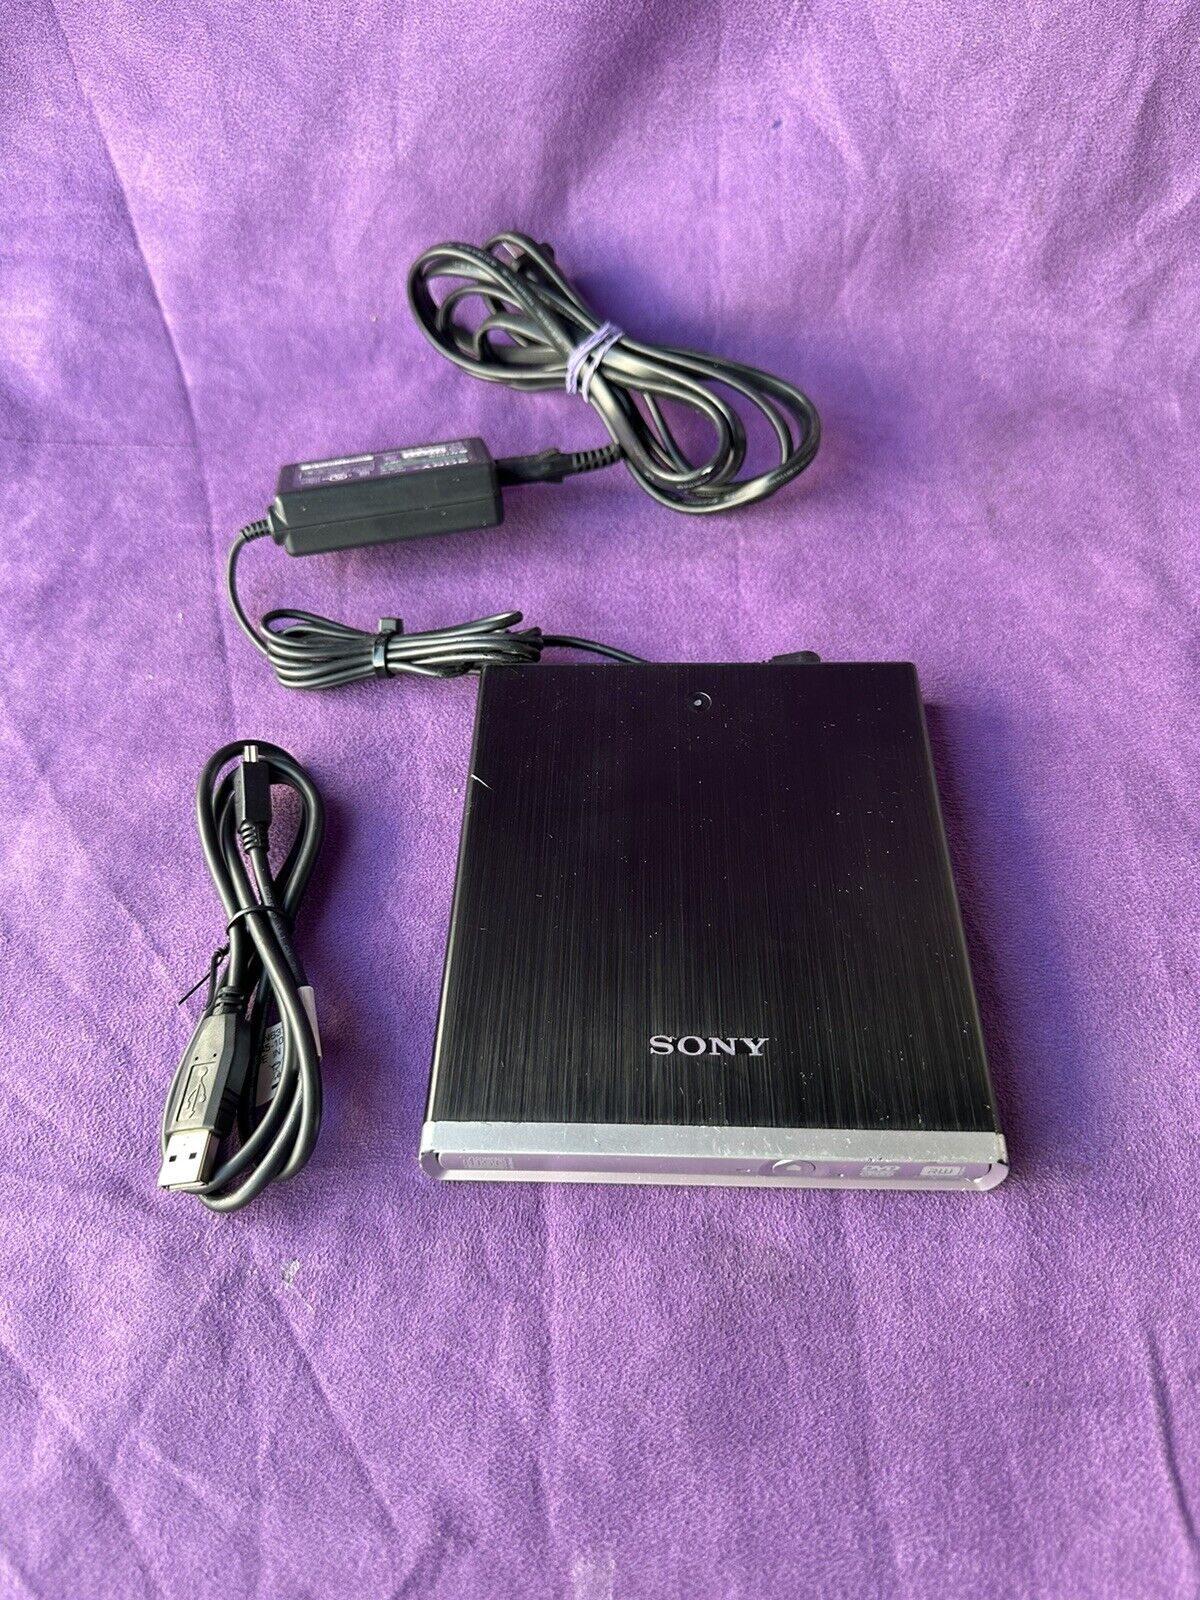 Sony DRX-S70U Grey Slim Portable Rewritable Drive With Power Cord USB Adapter